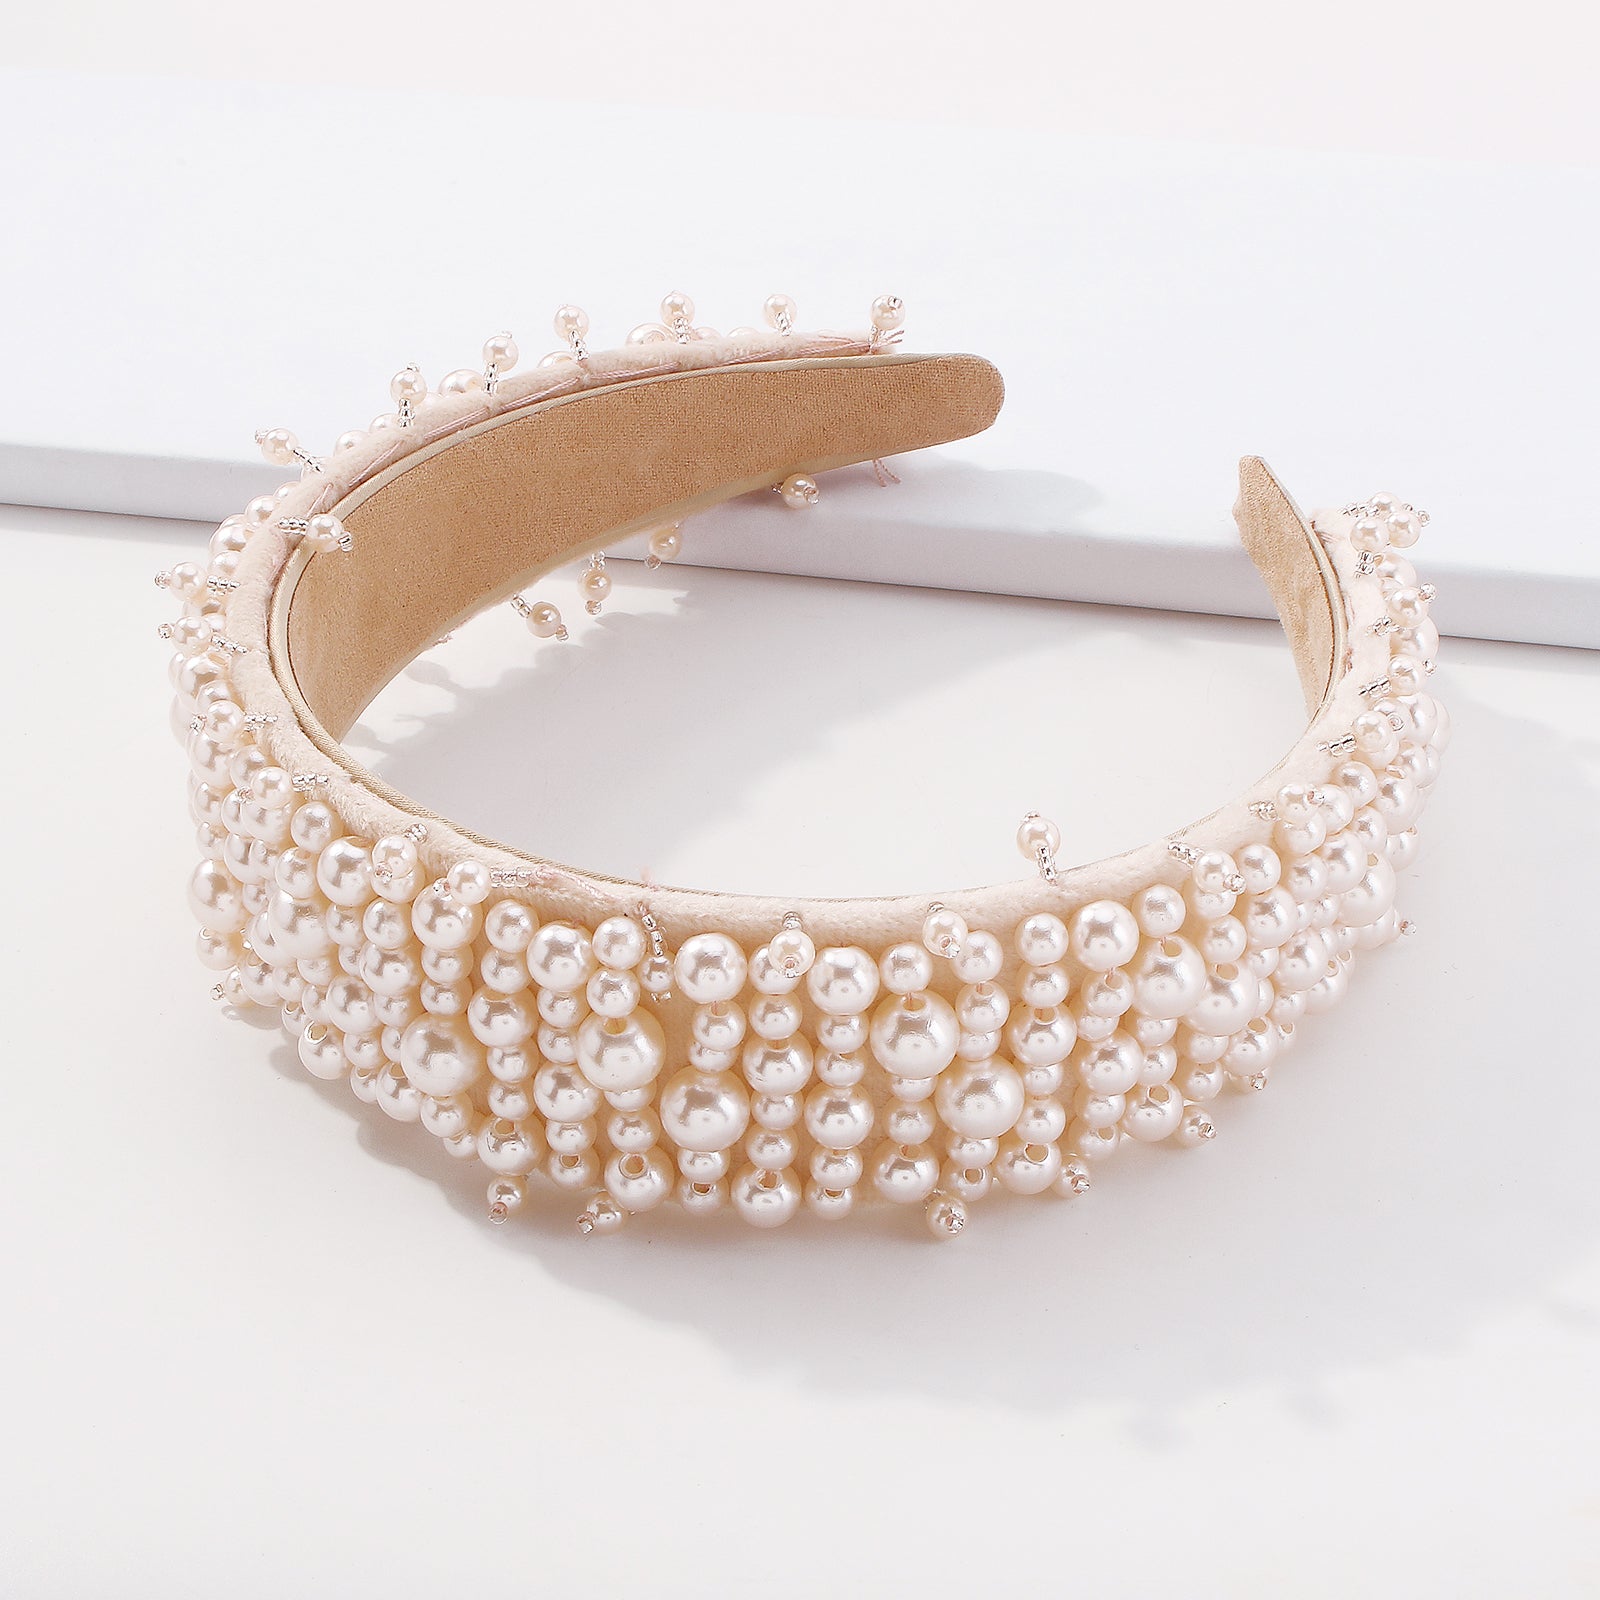 Baroque Wide Imitation Pearl Headbands medyjewelry